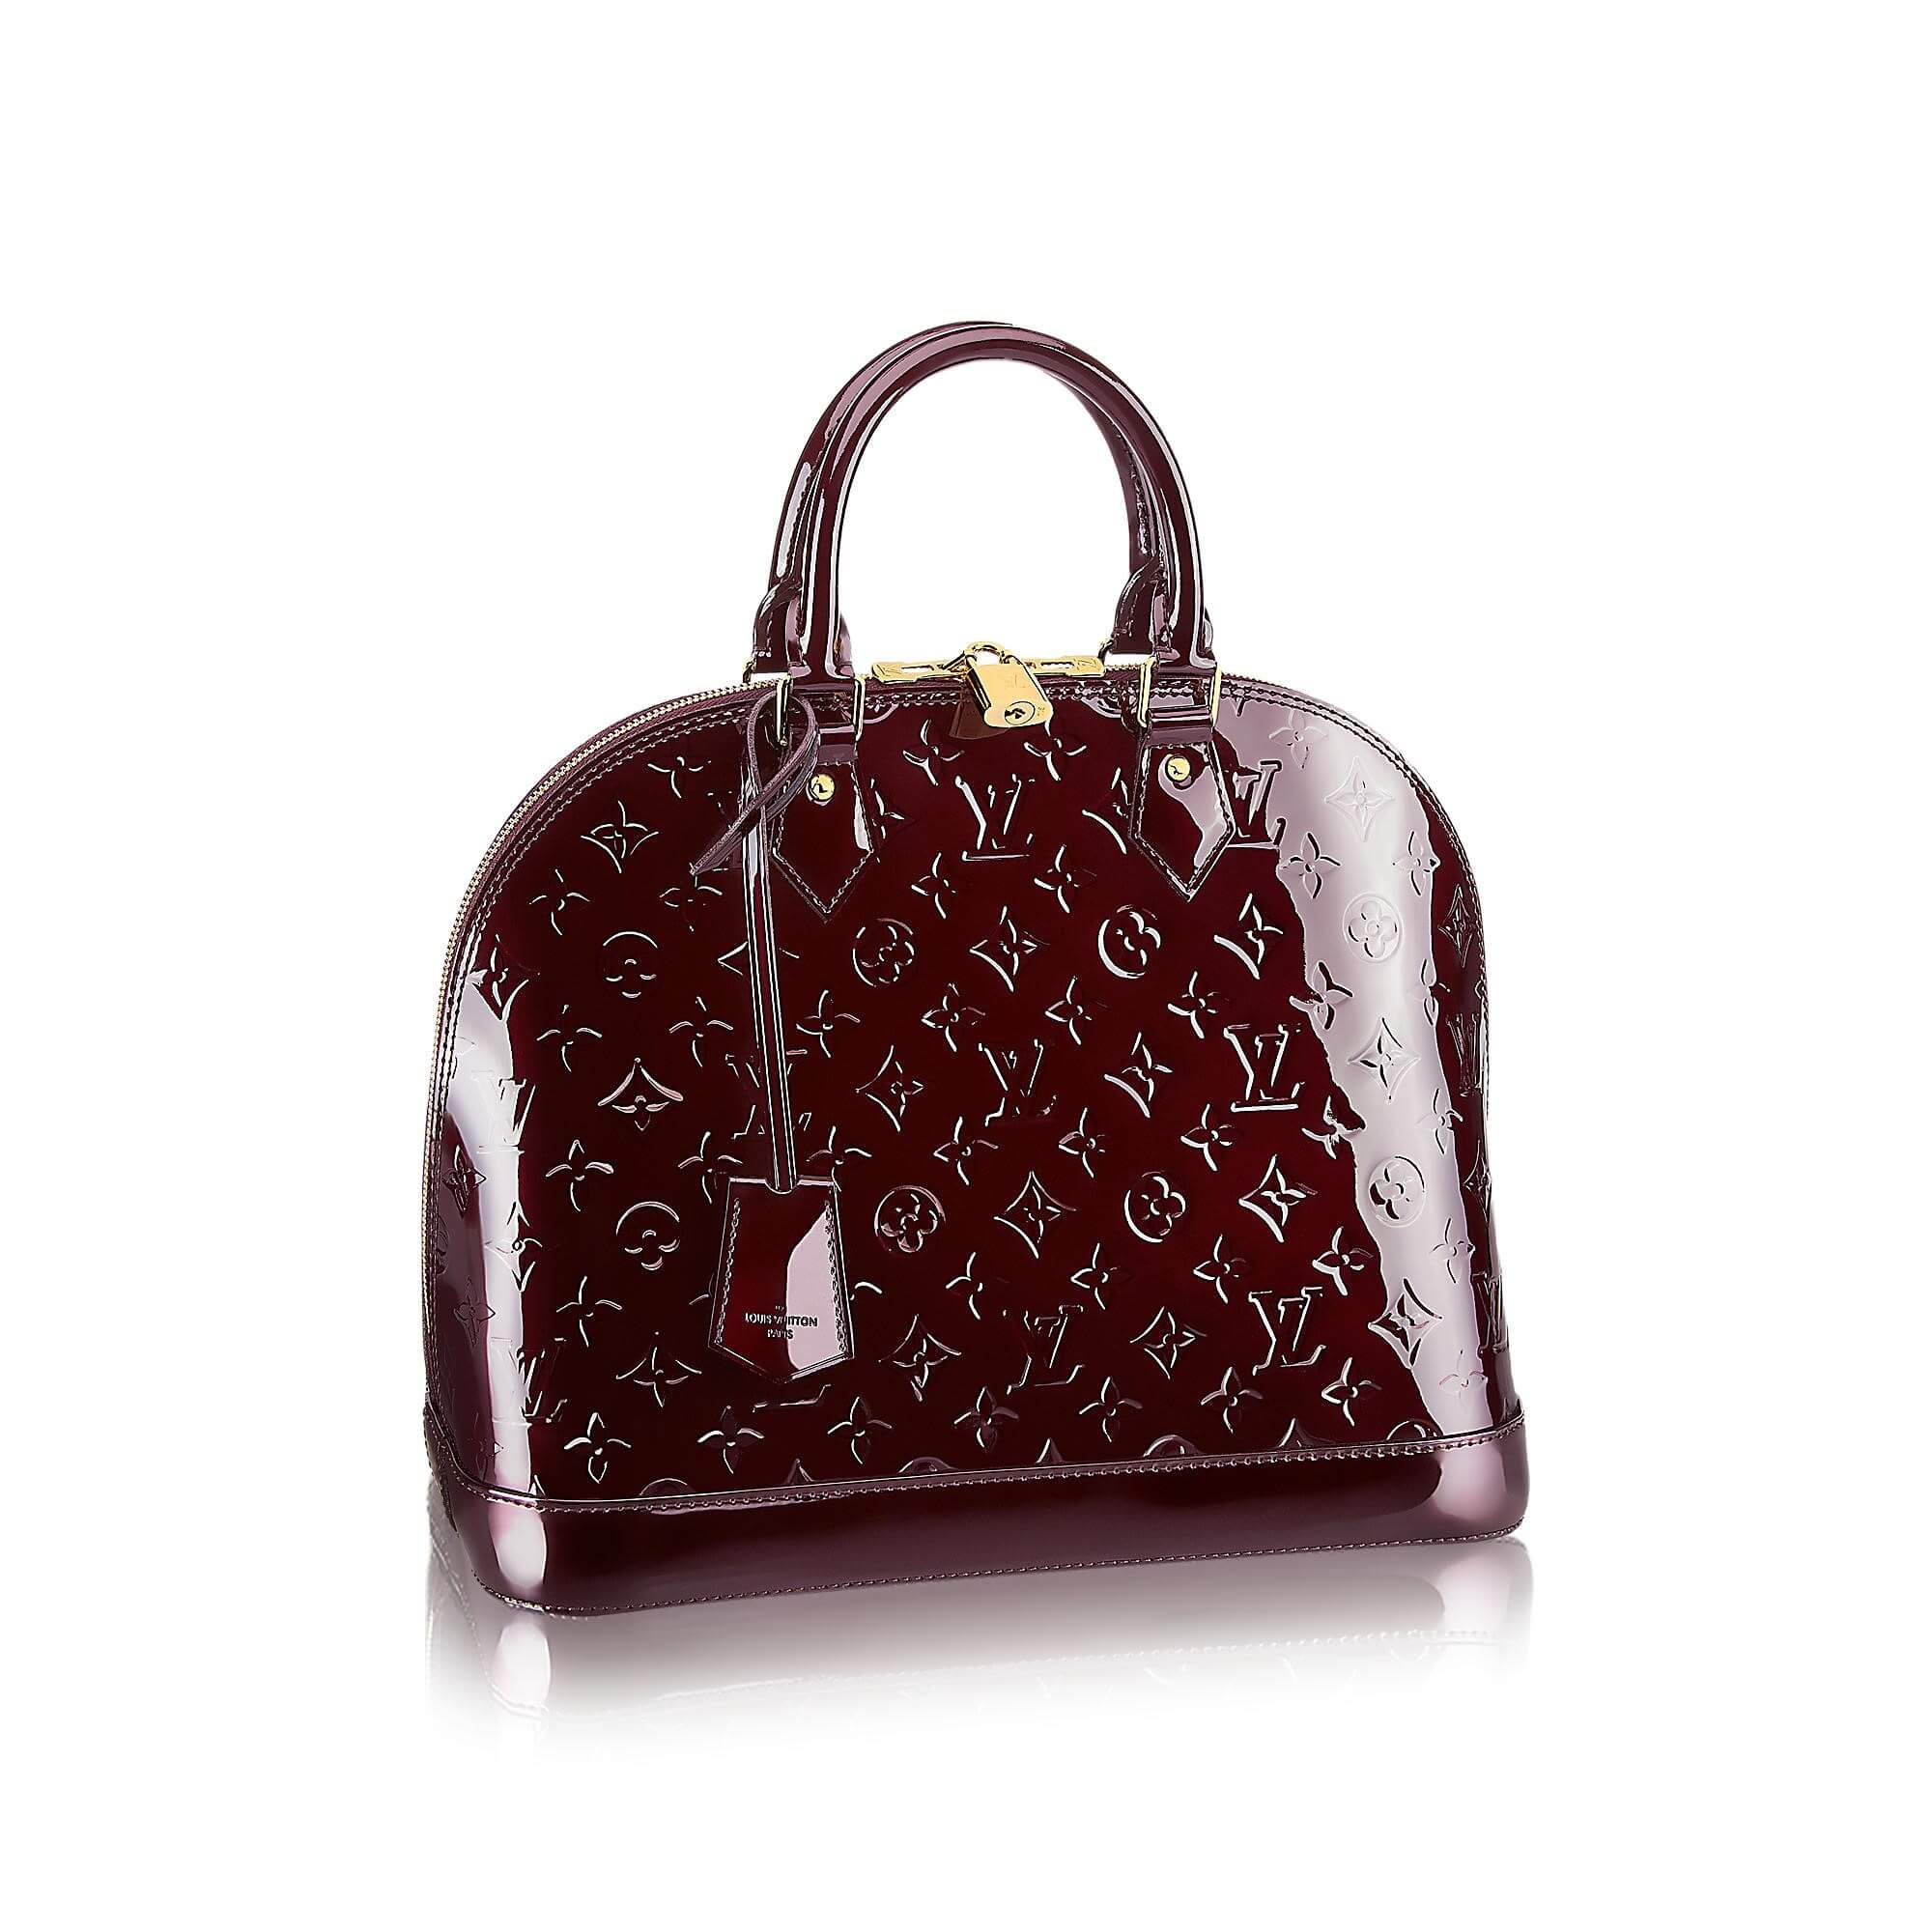 The Alma handbag